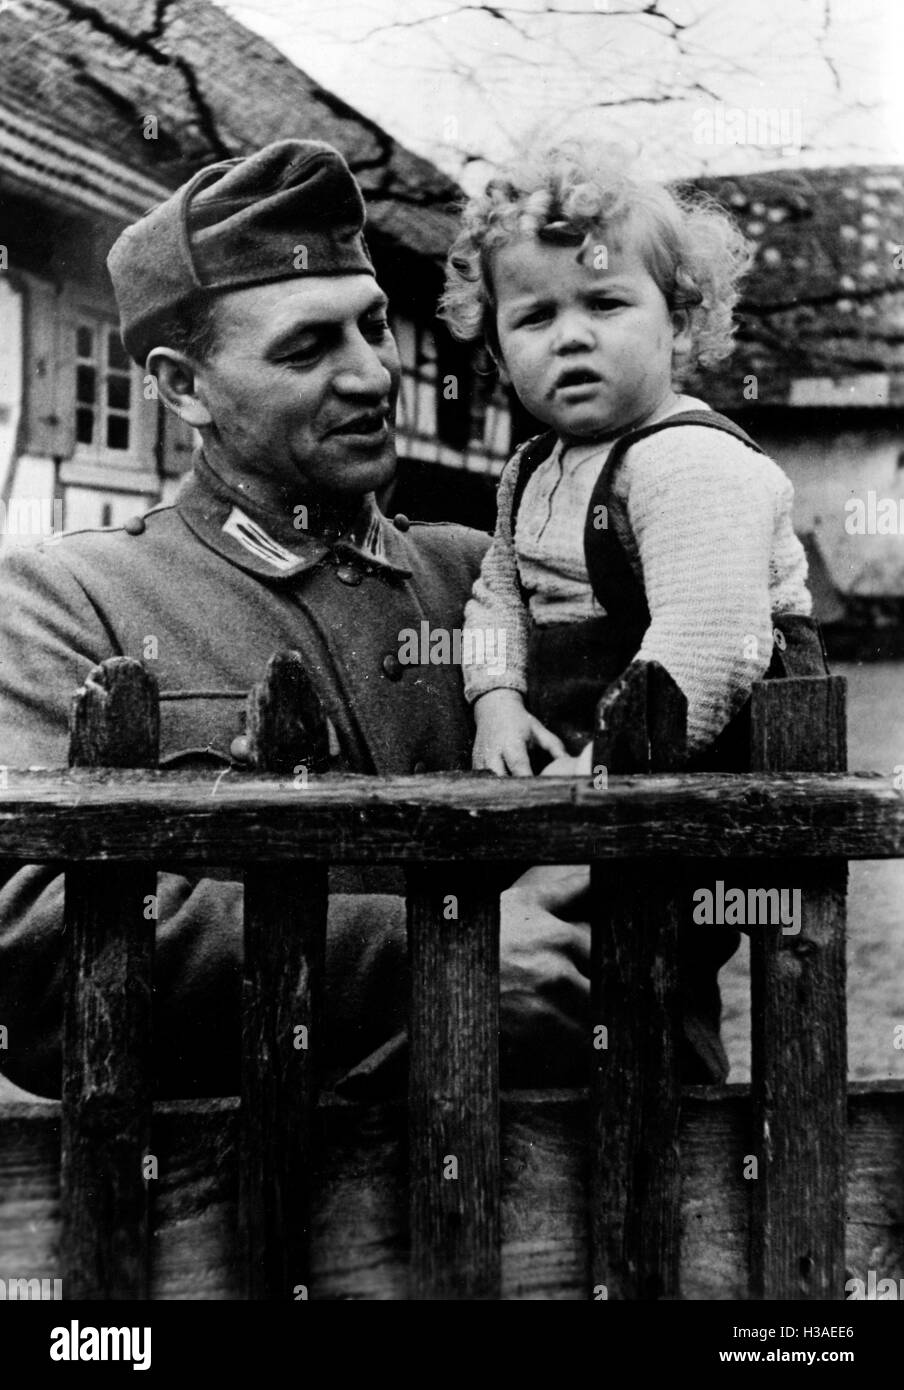 Volkssturm-Mitglied mit einem Kind, 1945 Stockfoto